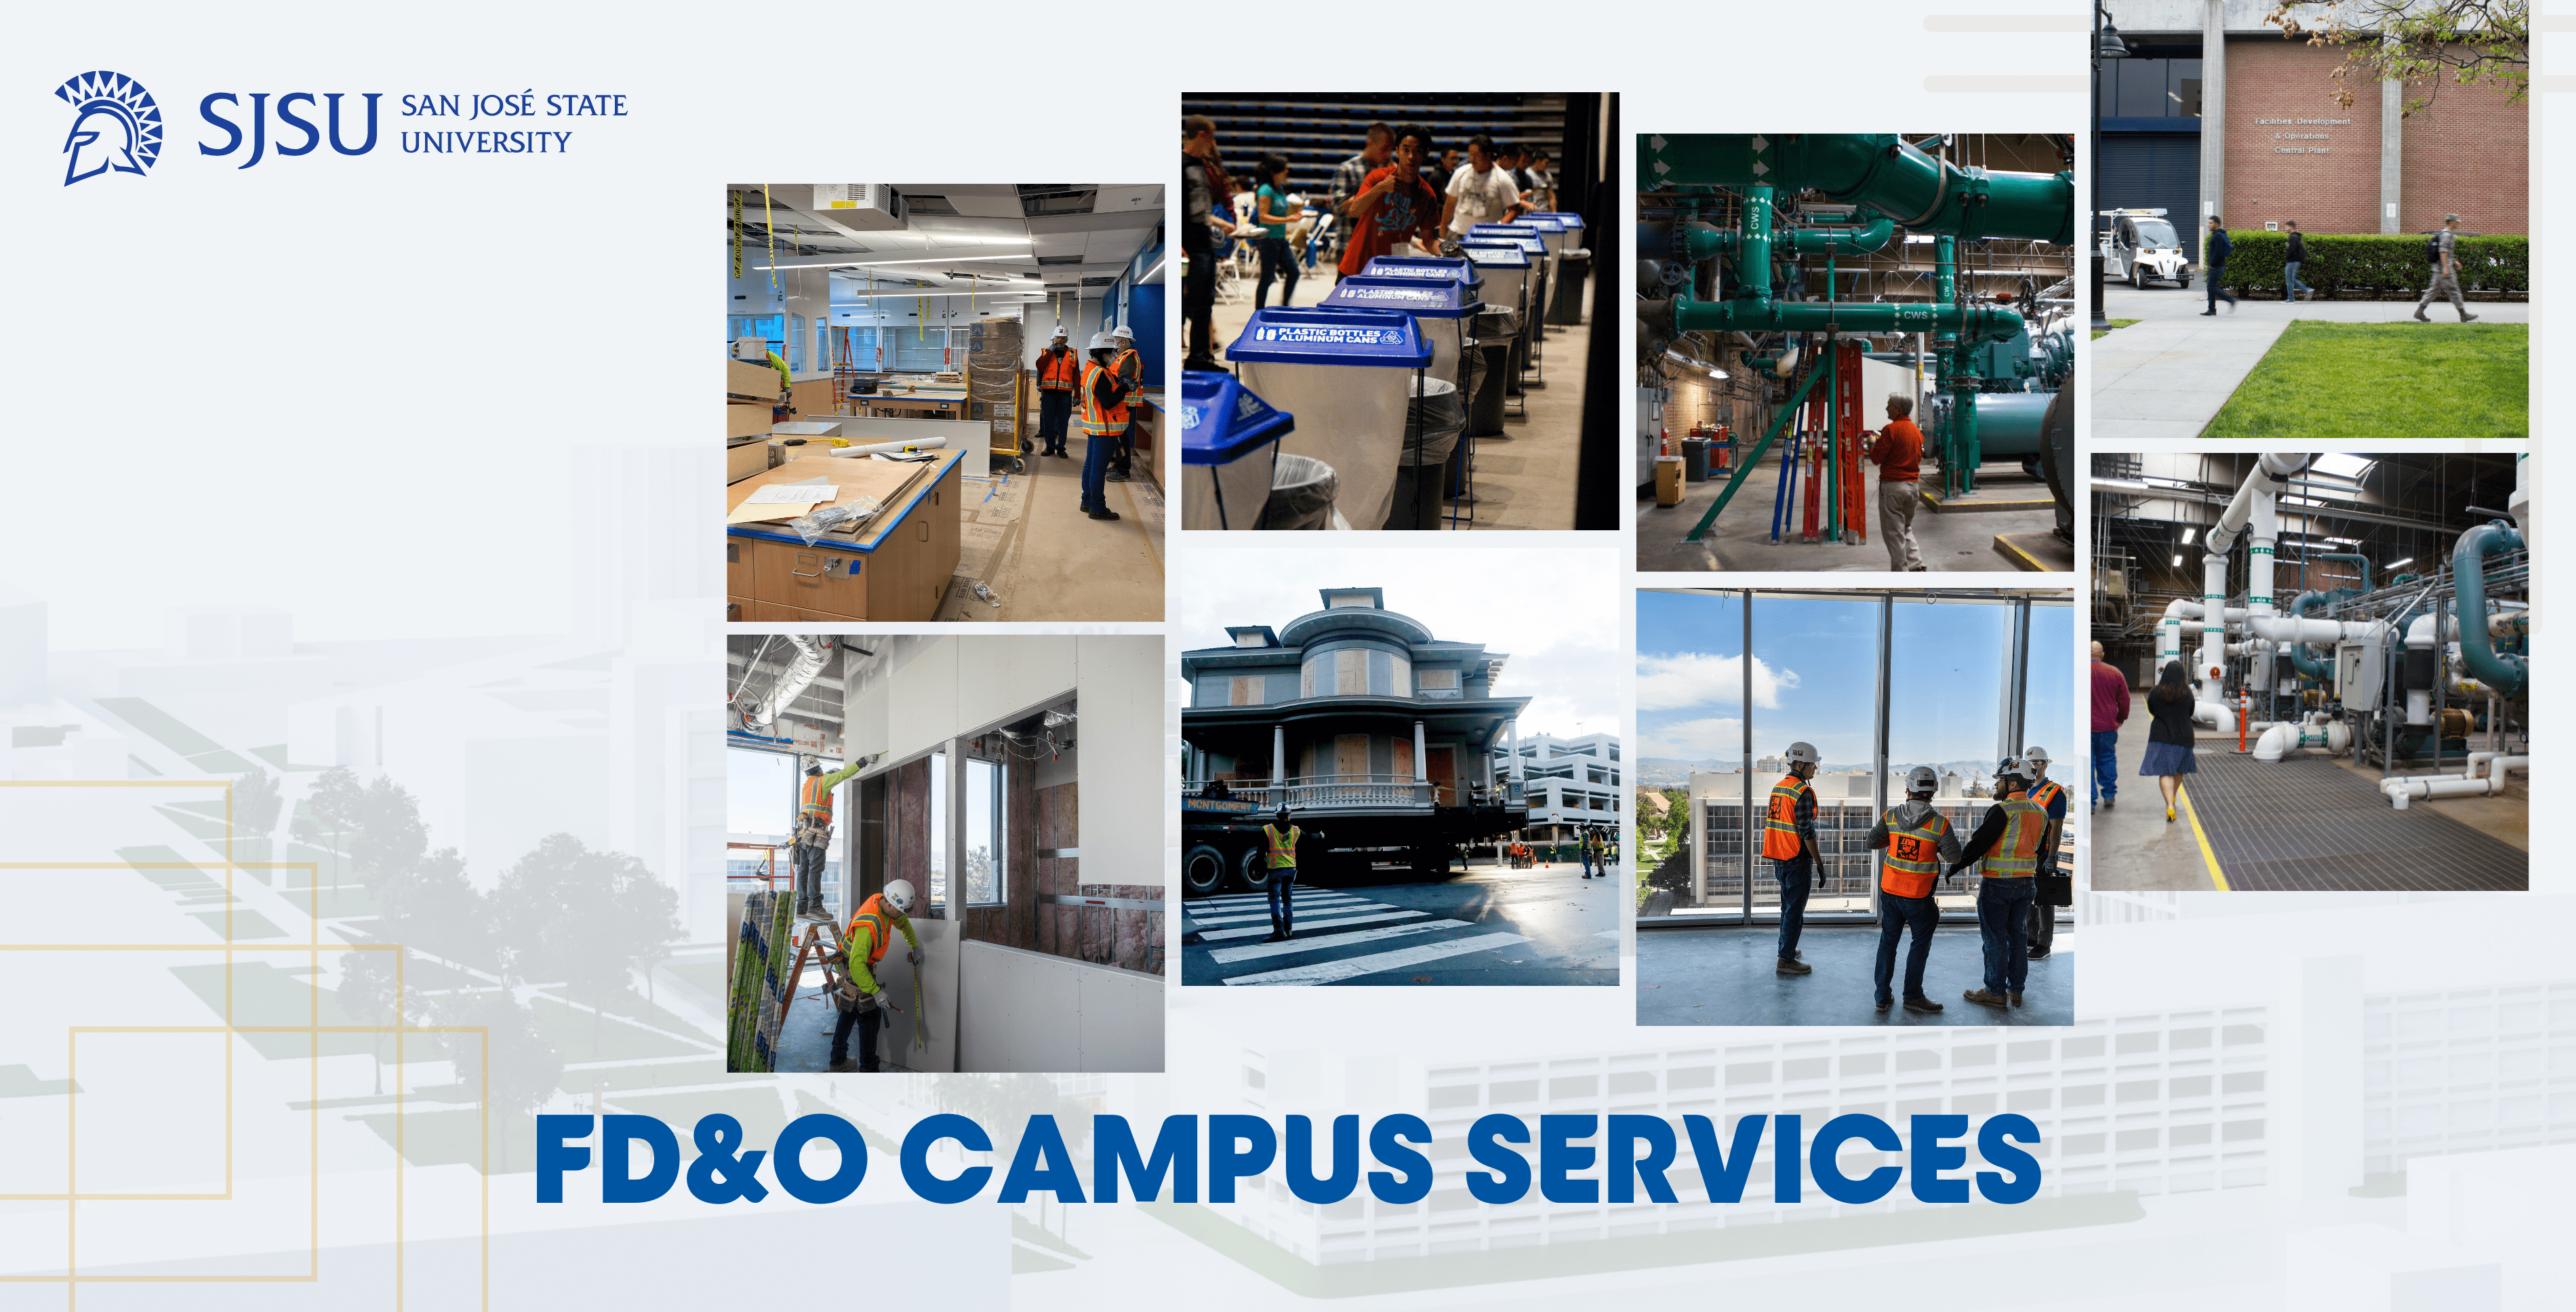 FD&O campus services image